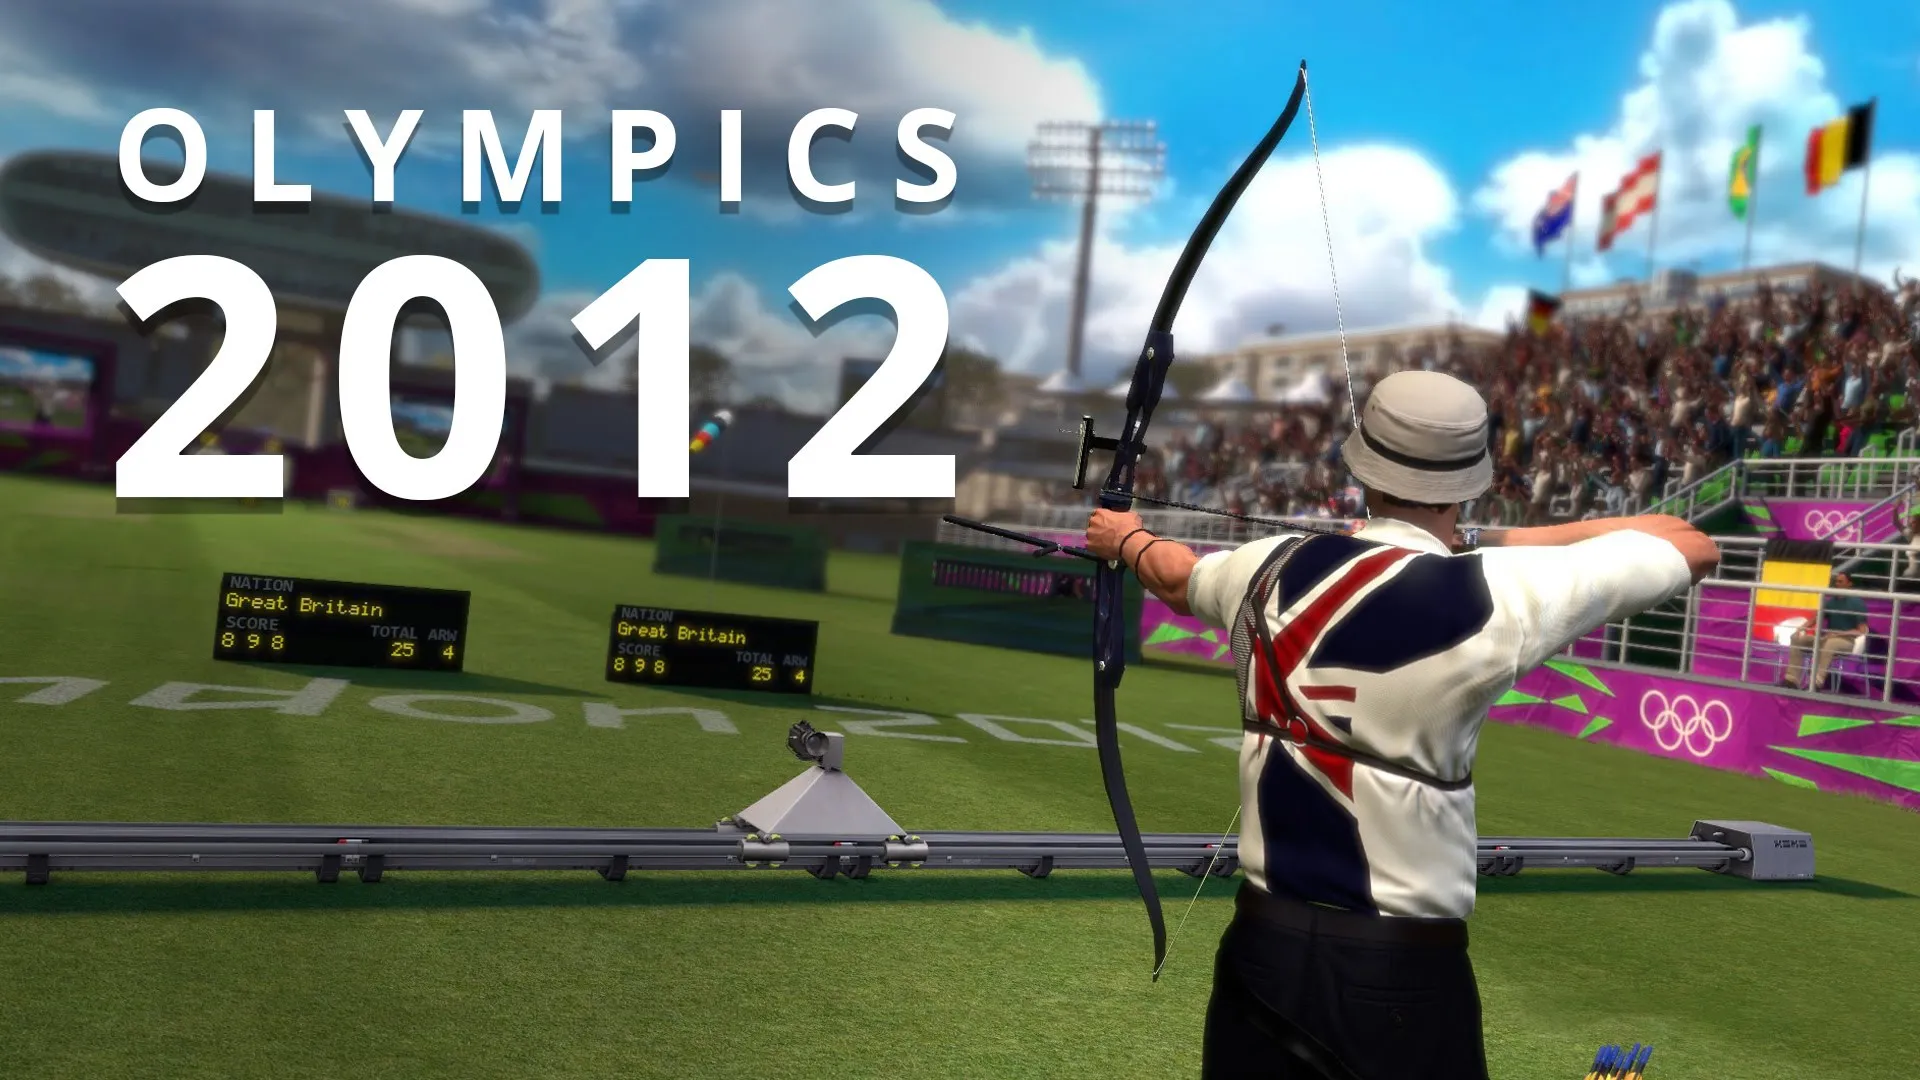 LondonOlympics2012 